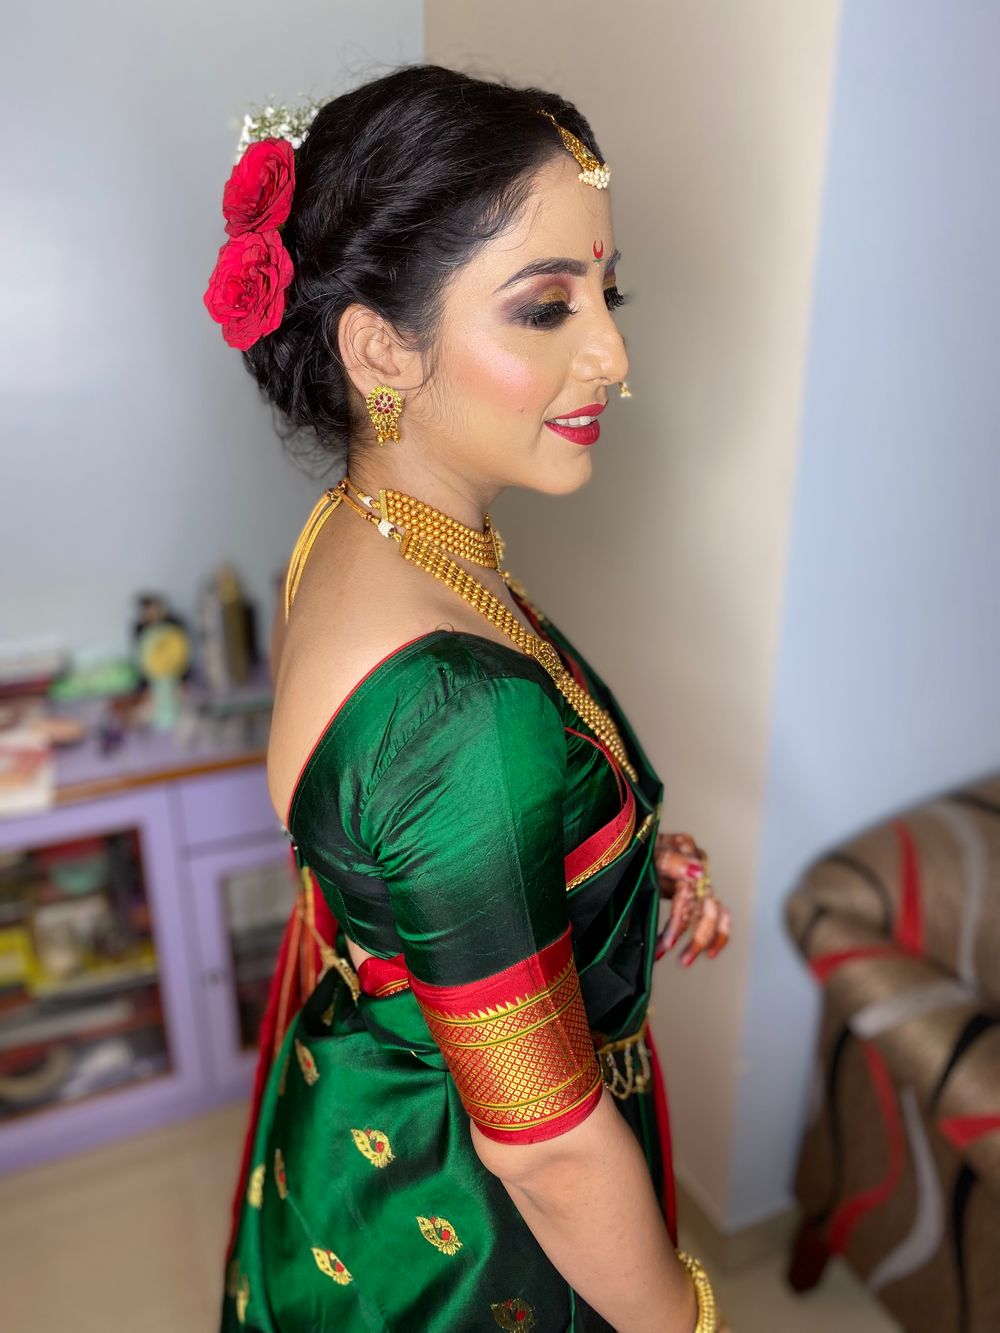 Photo By Chaitrali Makeup Artist - Bridal Makeup